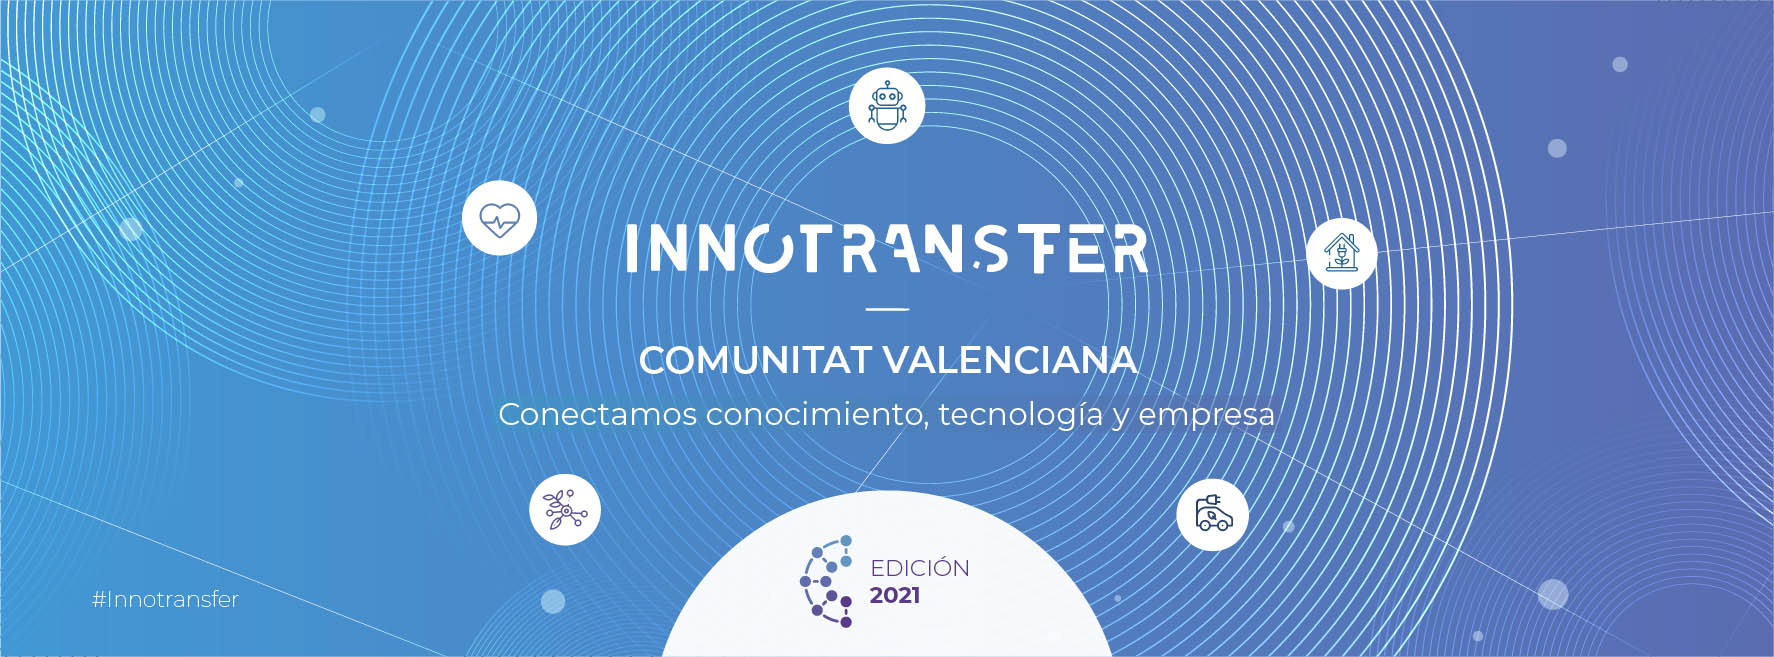 Innotransfer 2021 - Red de Parques Científicos de la comunitat Valenciana